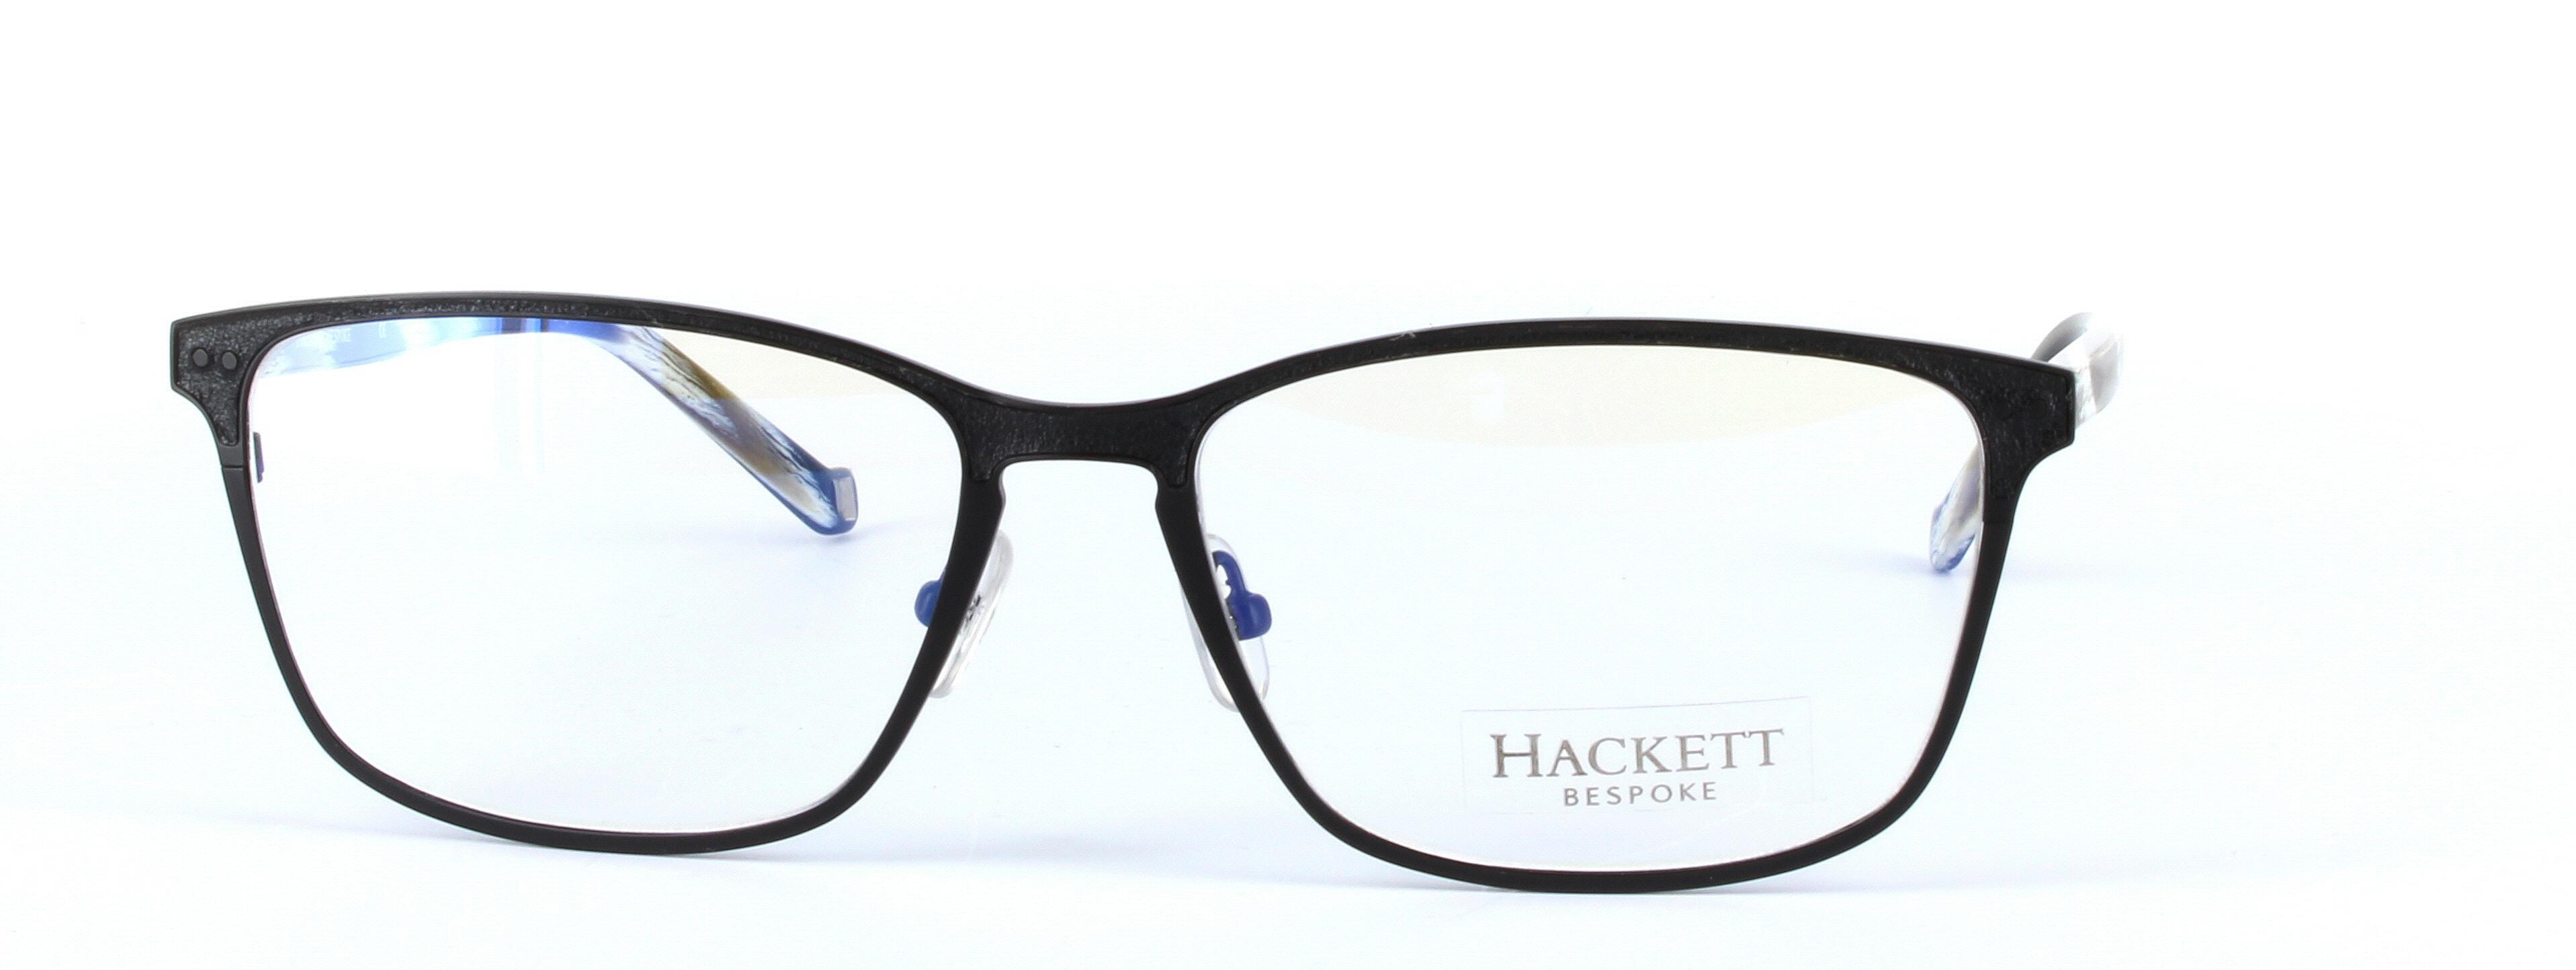 HACKETT BESPOKE (177-02) Black Full Rim Oval Square Metal Glasses - Image View 5